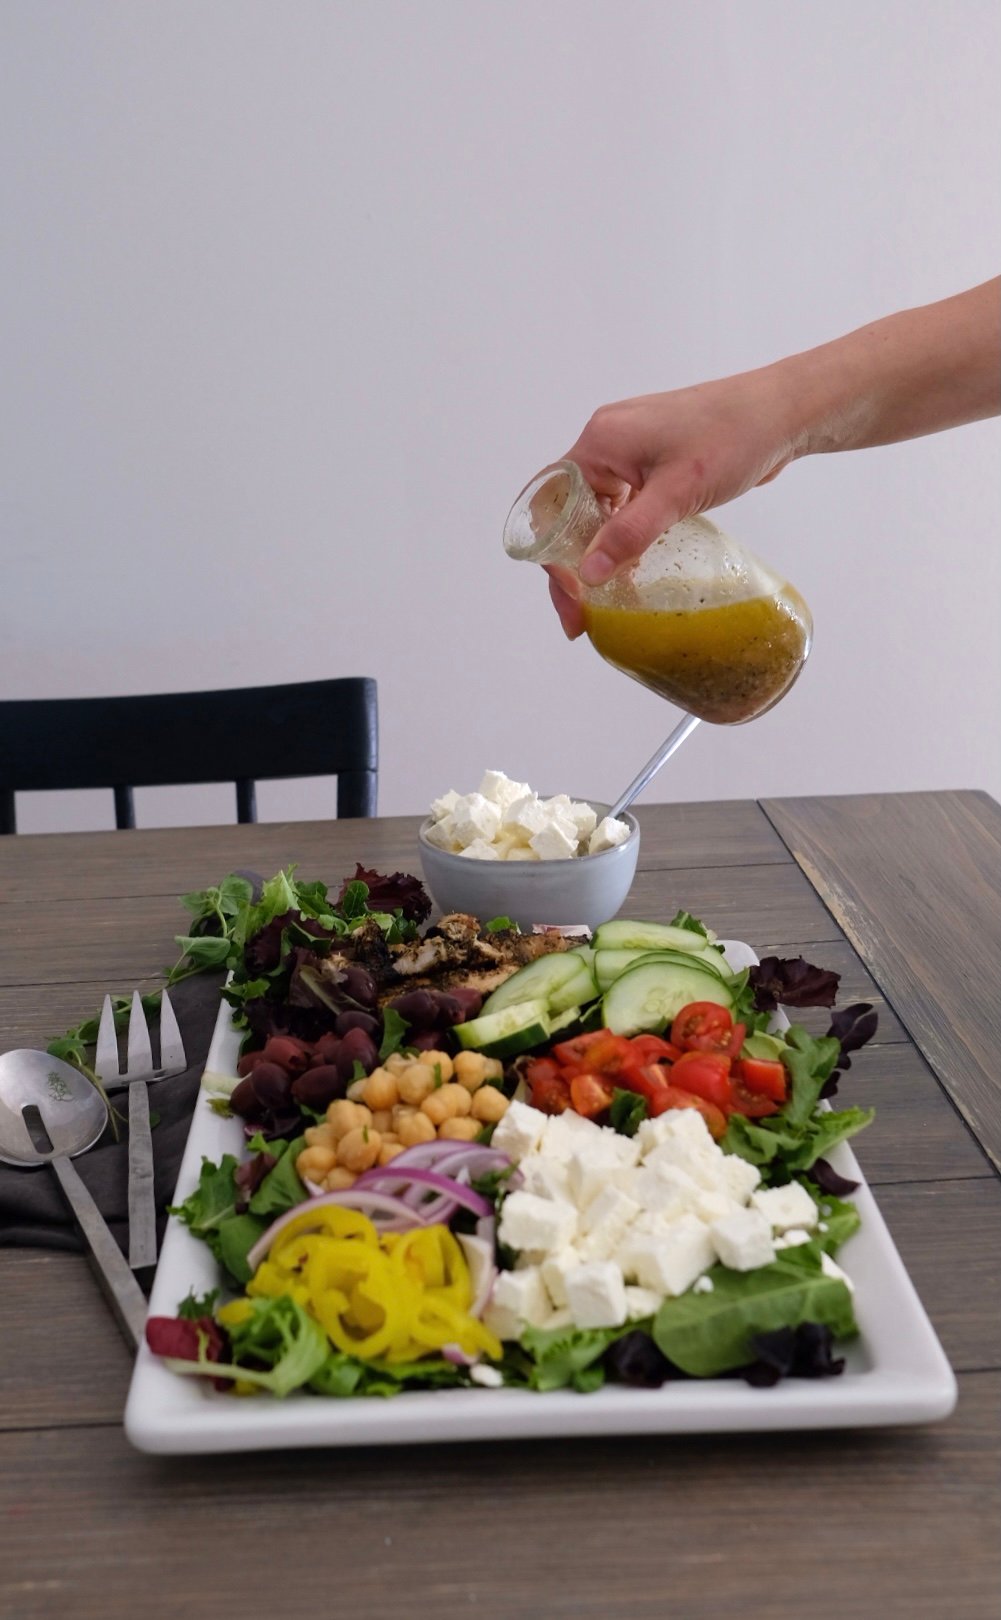 Lemon and Oregano Greek Salad Dressing